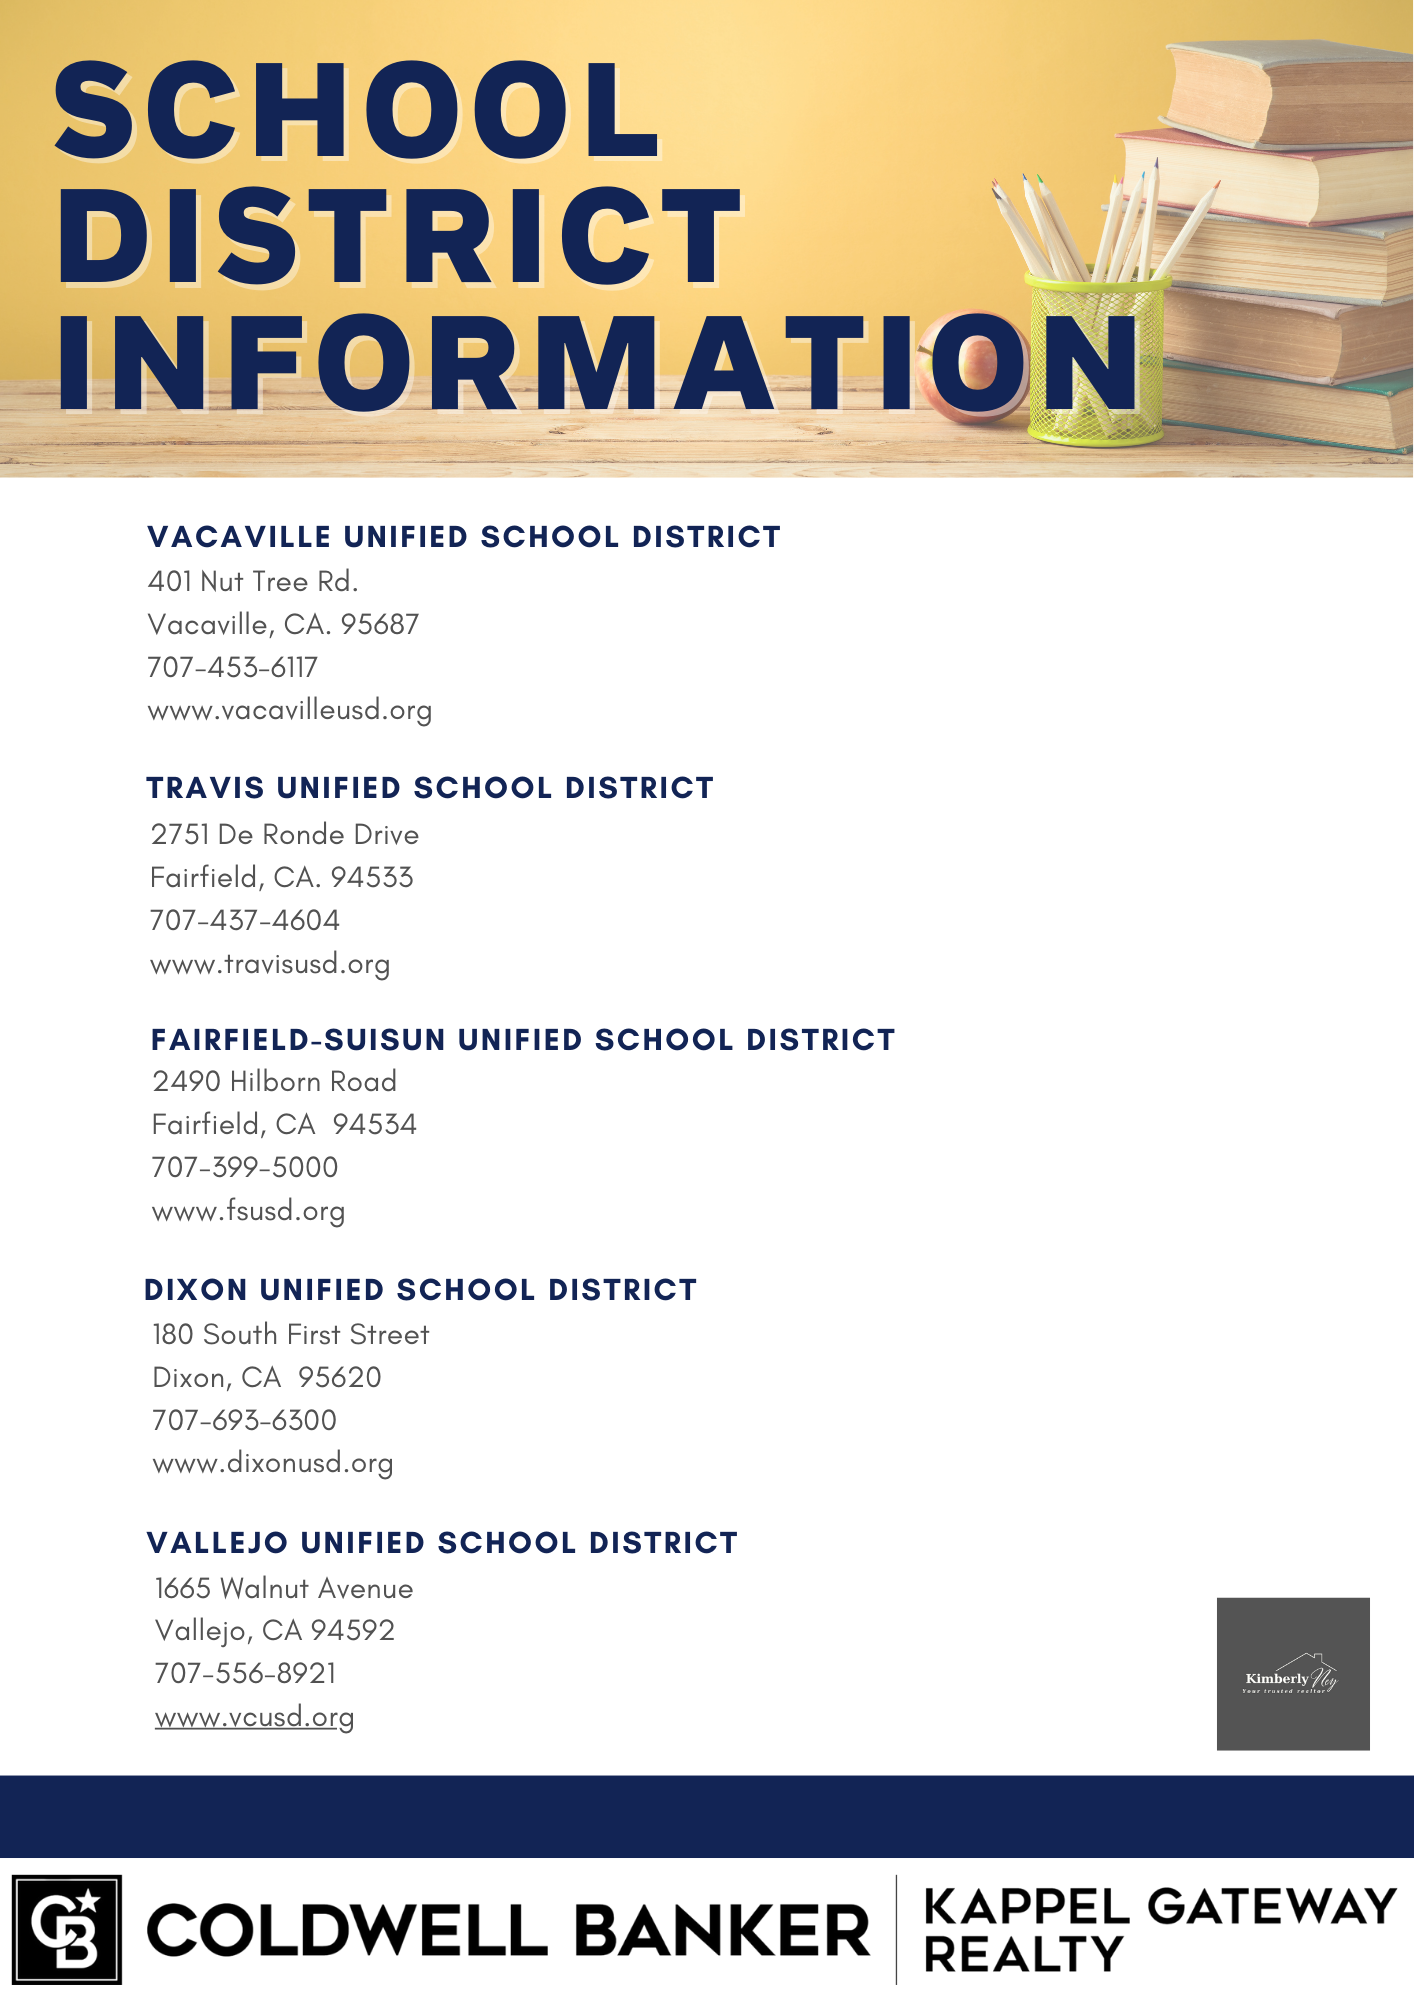 School Info